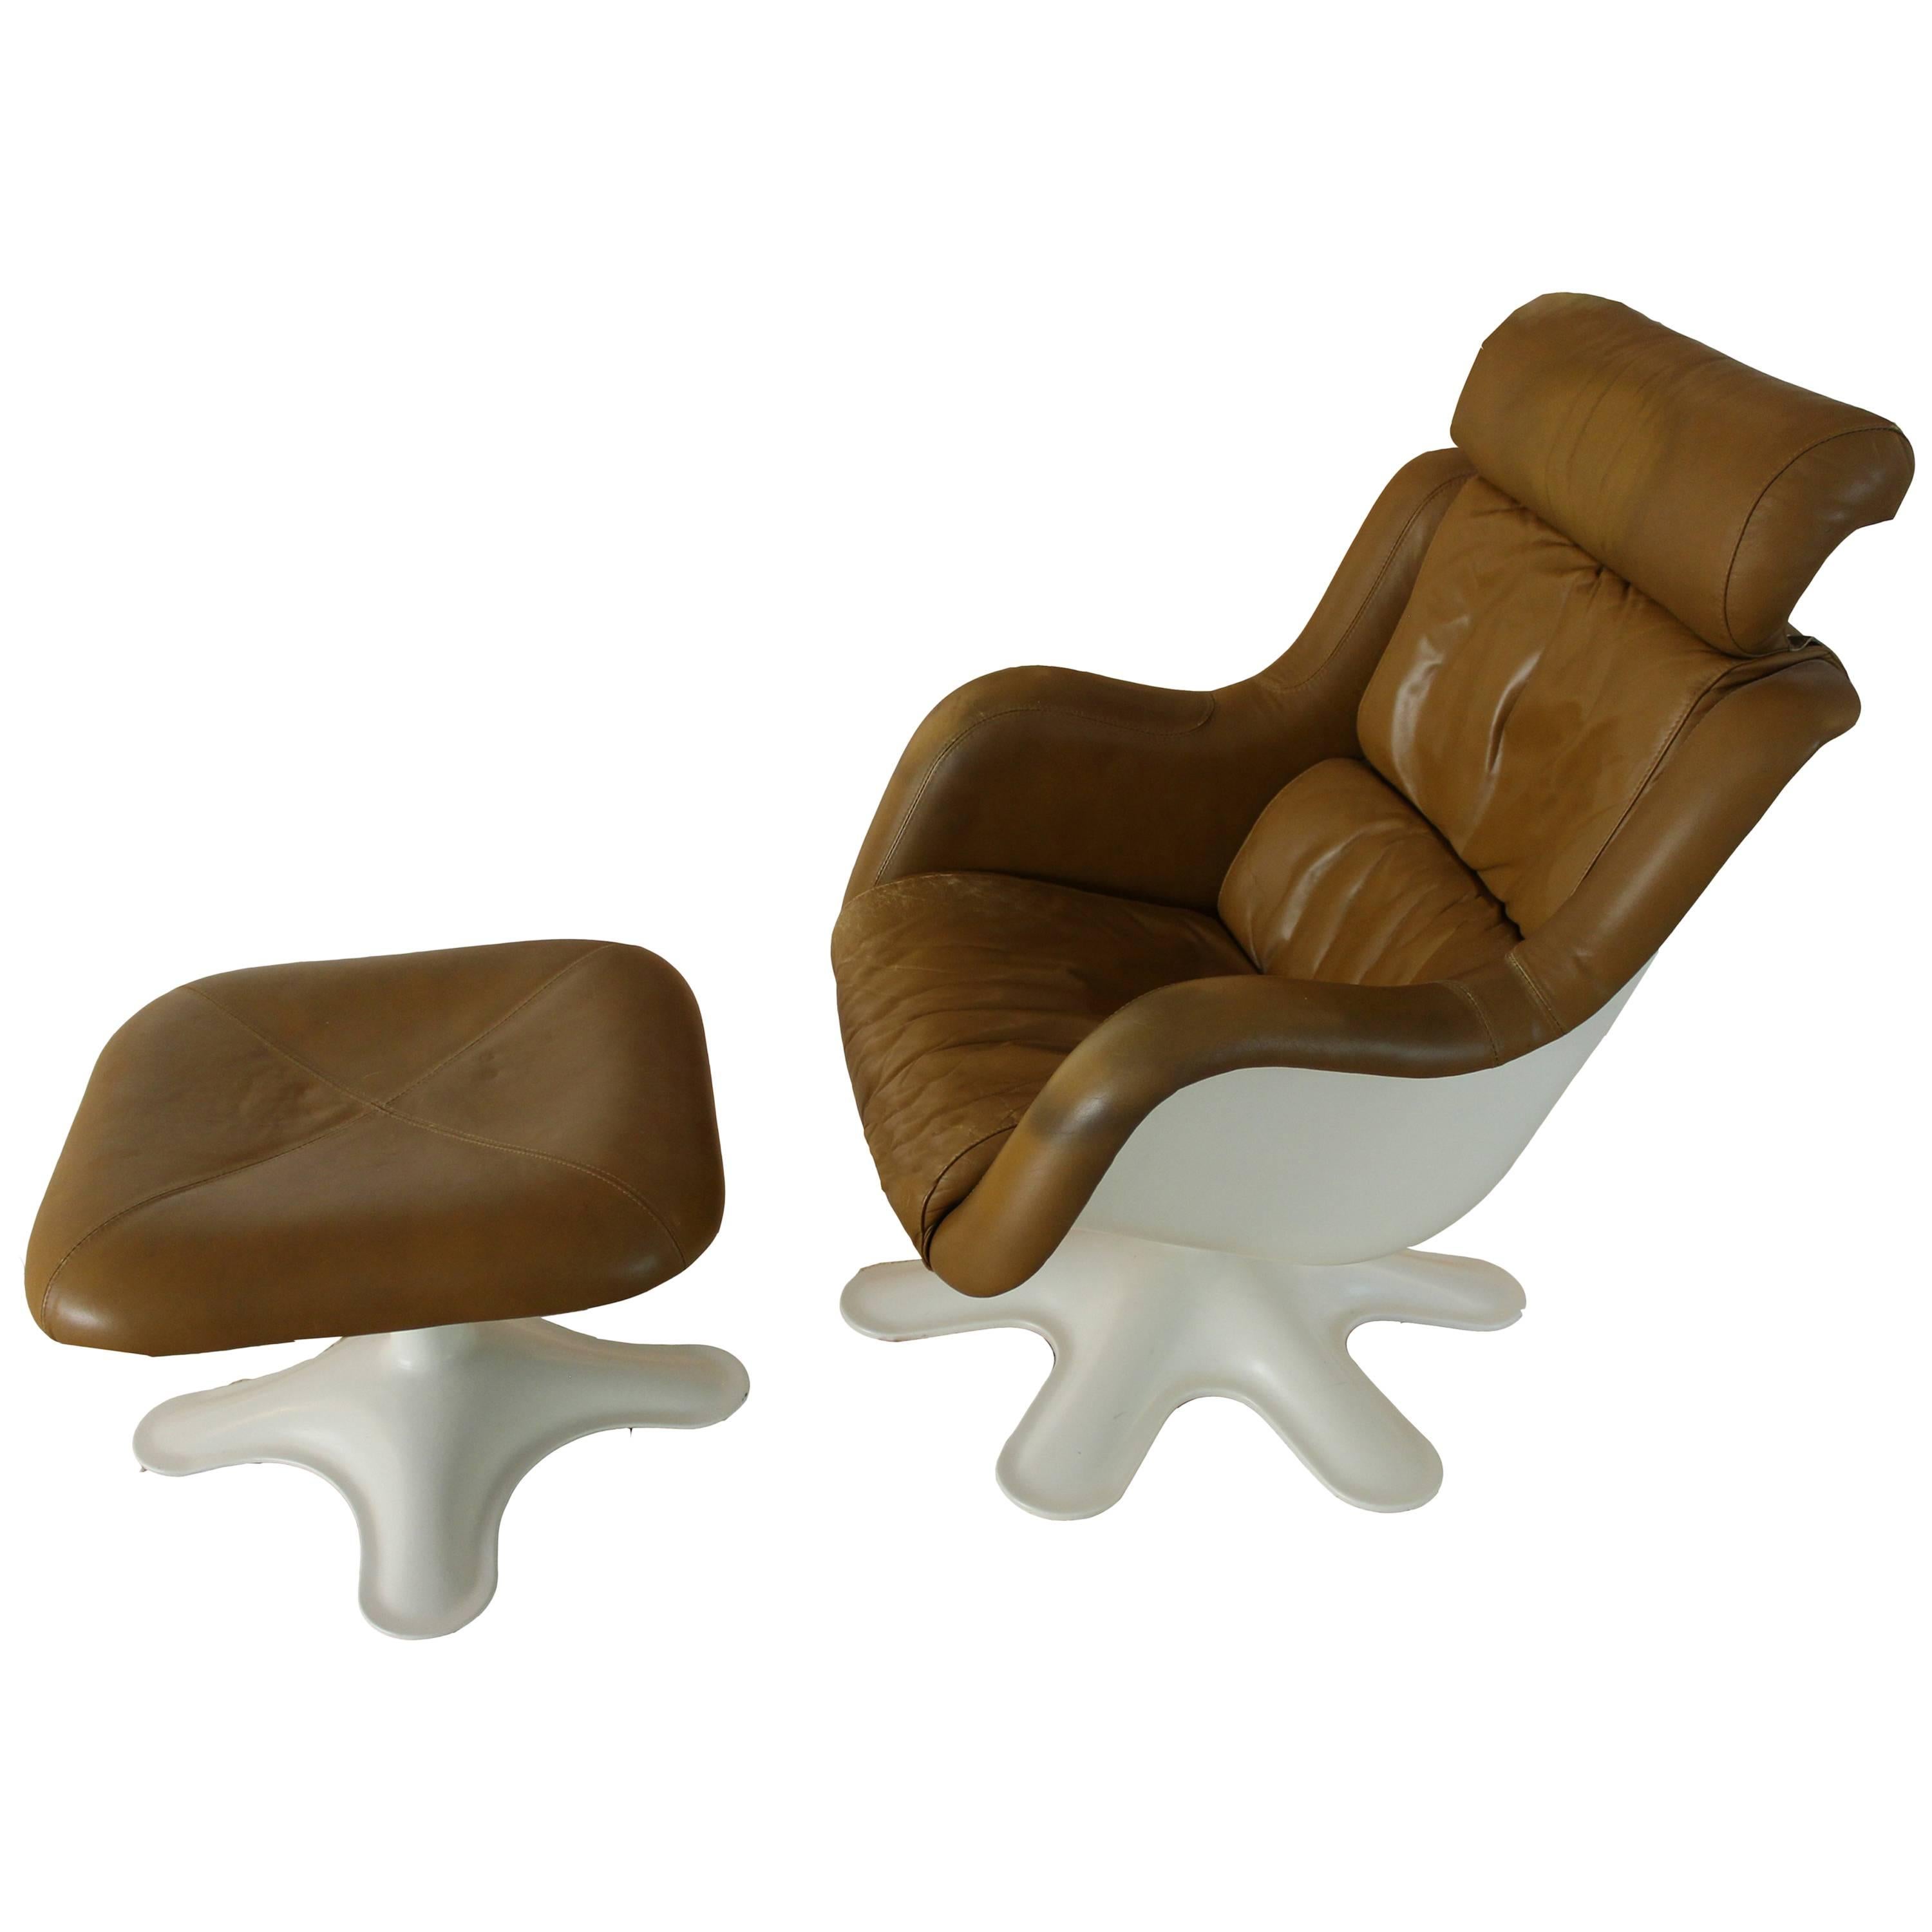 Yrjö Kukkapuro Chair and Ottoman Brown Leather over Molded Plastic